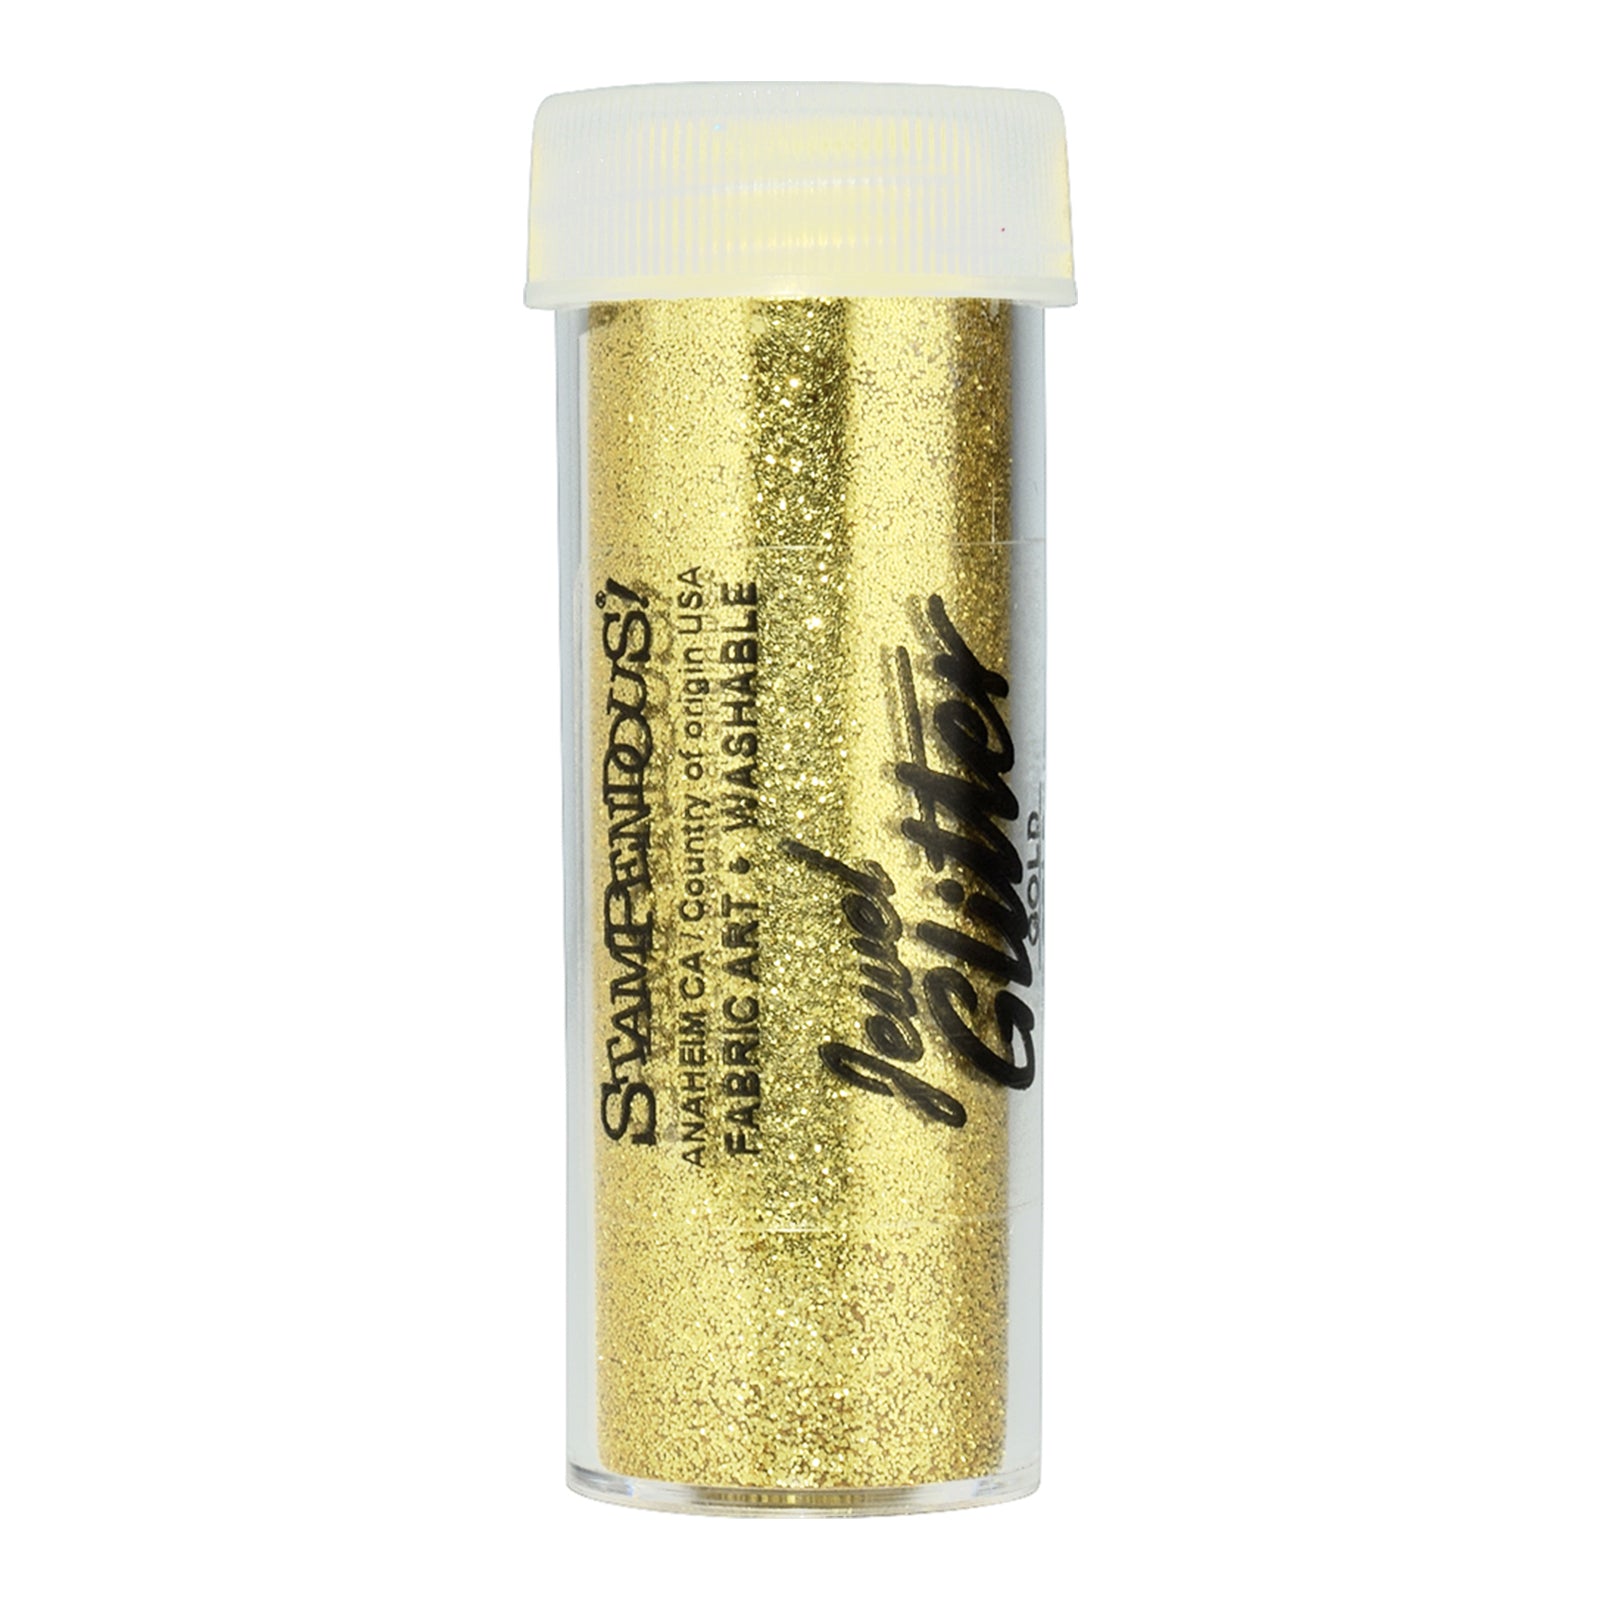 Stampendous Frantage Micro Glitter .67 oz - Gold